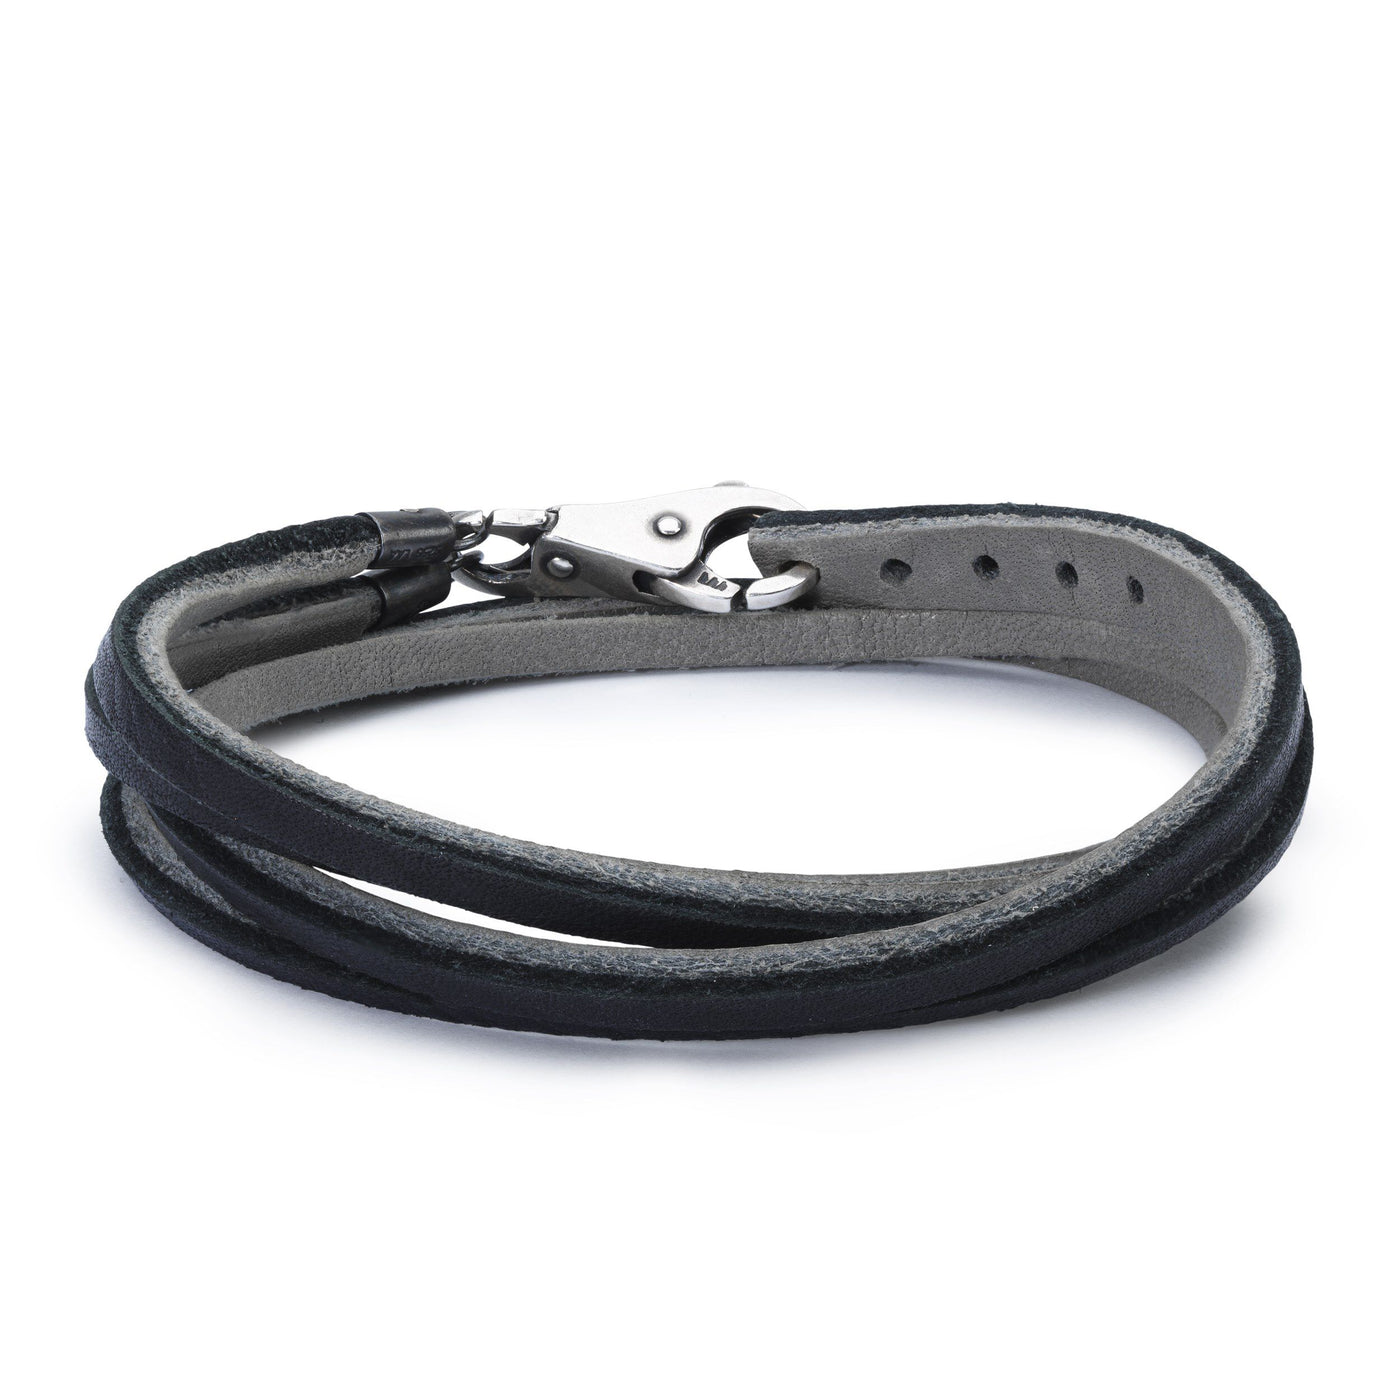 Leather Bracelet Black/Grey - Trollbeads Canada